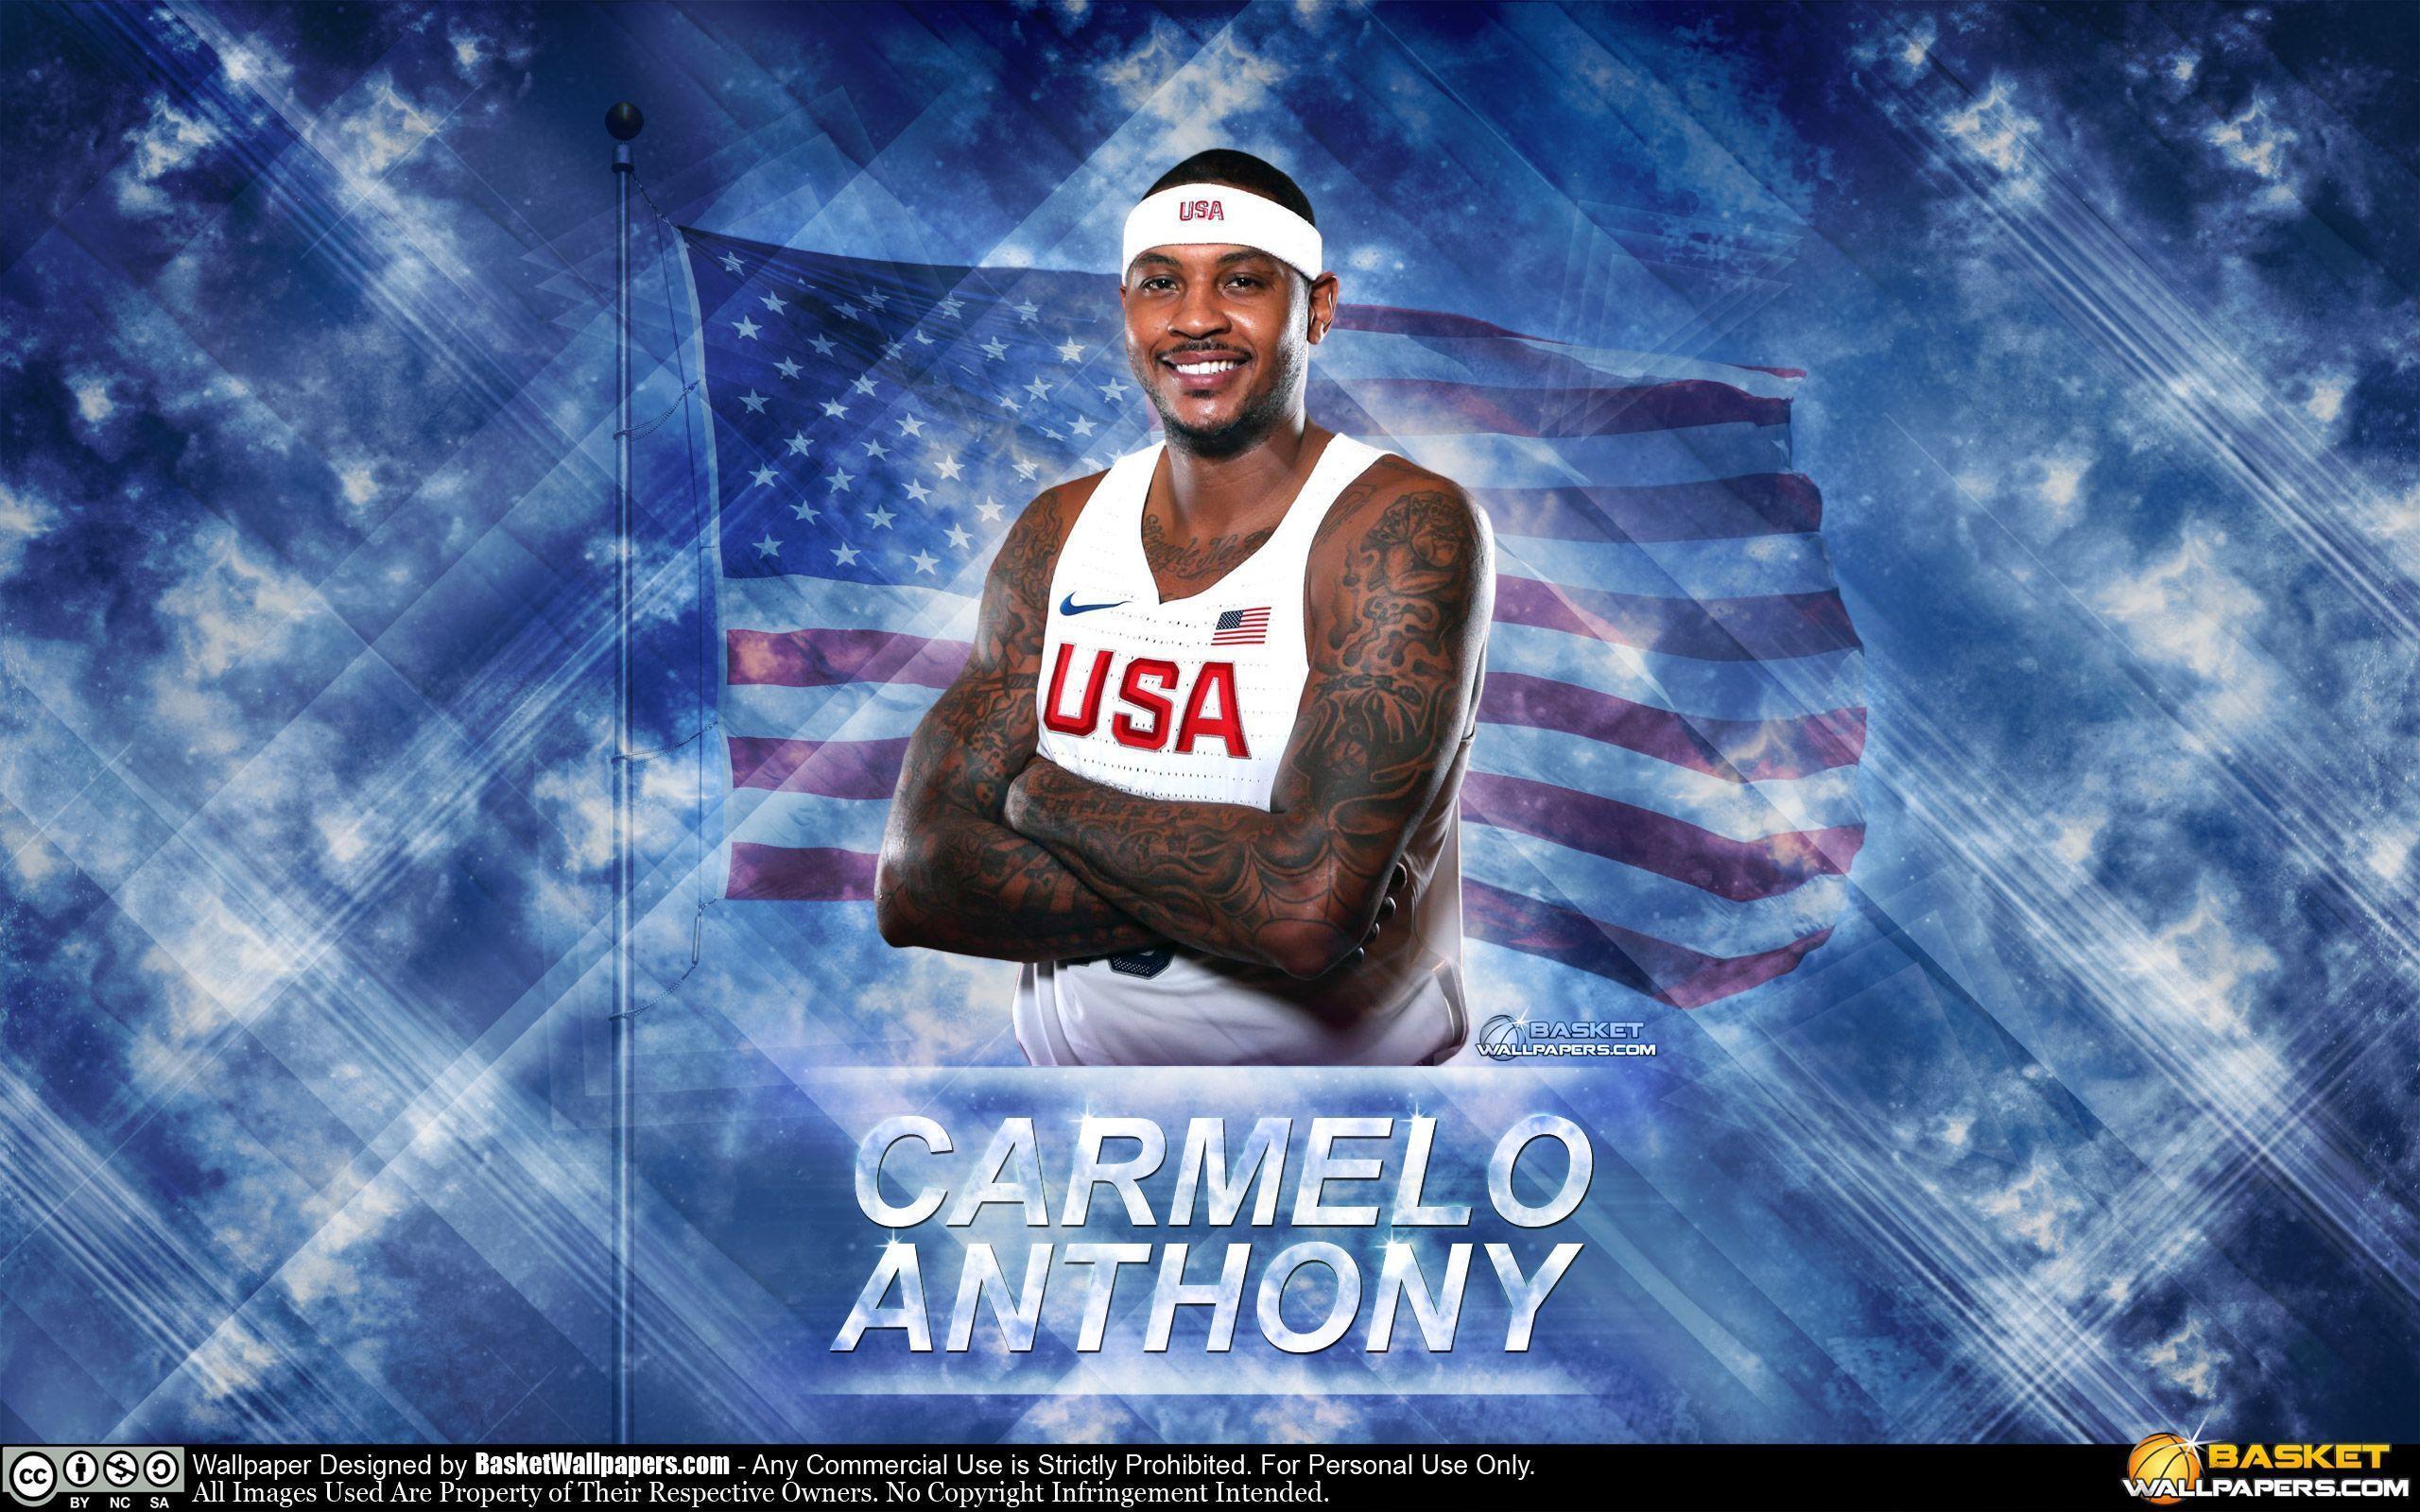 Carmelo Anthony USA 2016 Olympics Wallpaper. Basketball